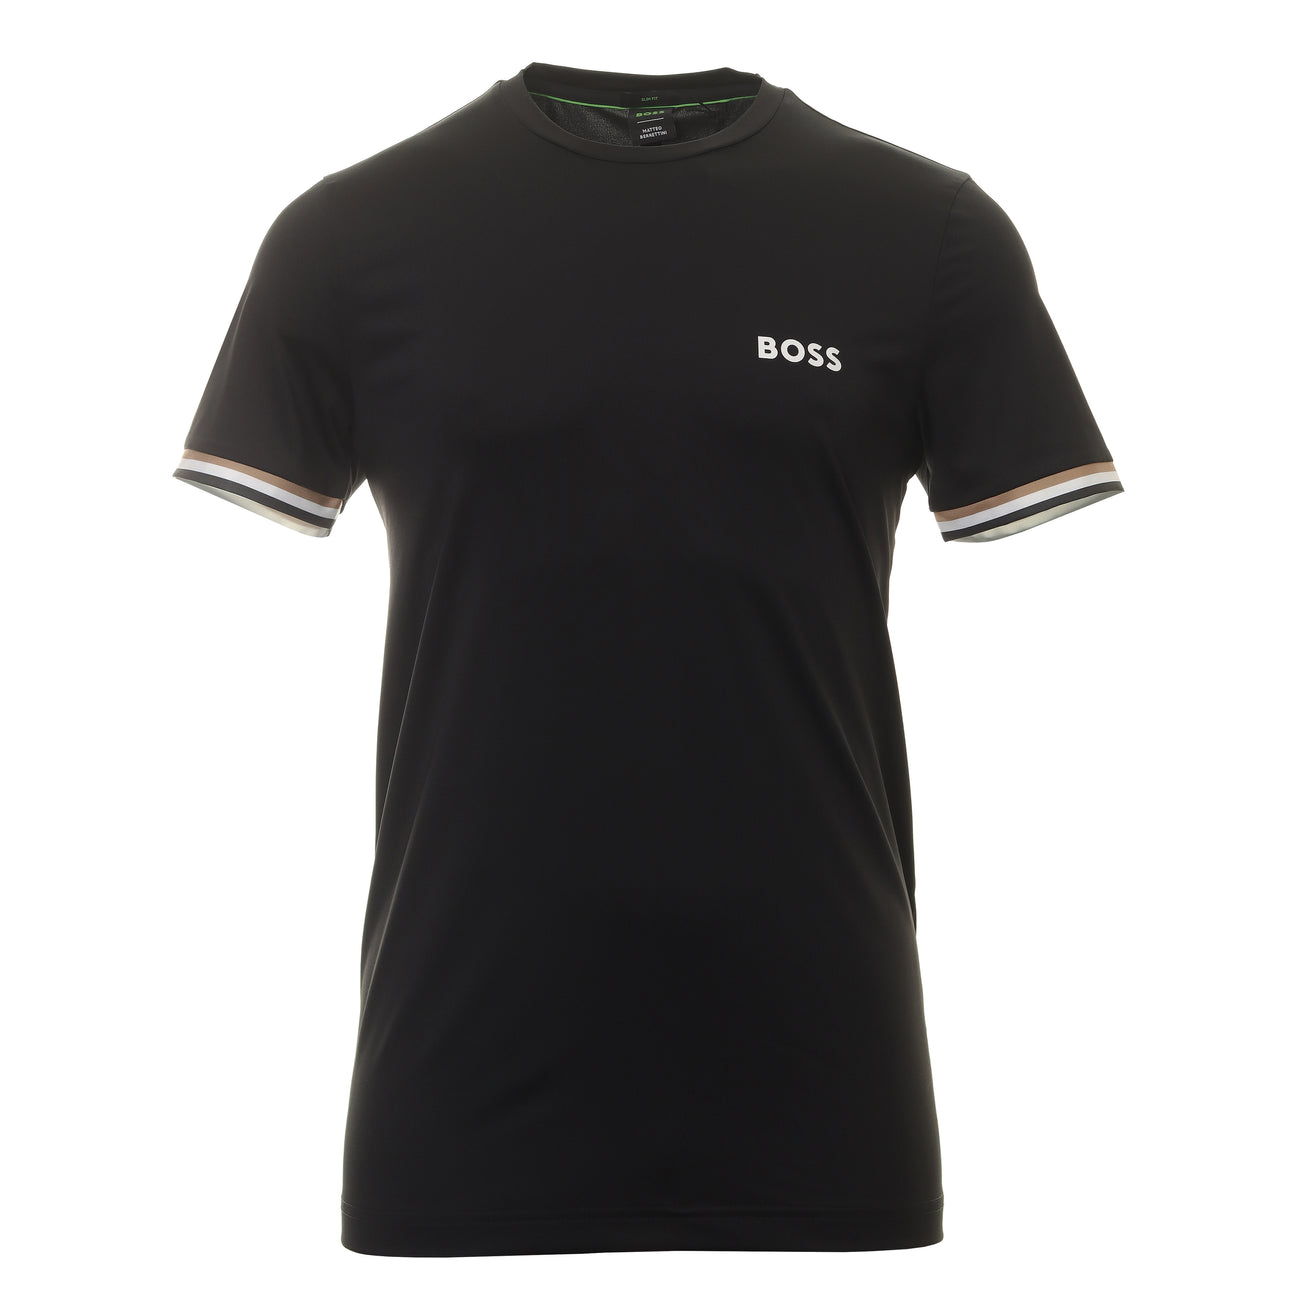 Hugo Boss Men's Tee Mb 2 Black Short Sleeve T-Shirt